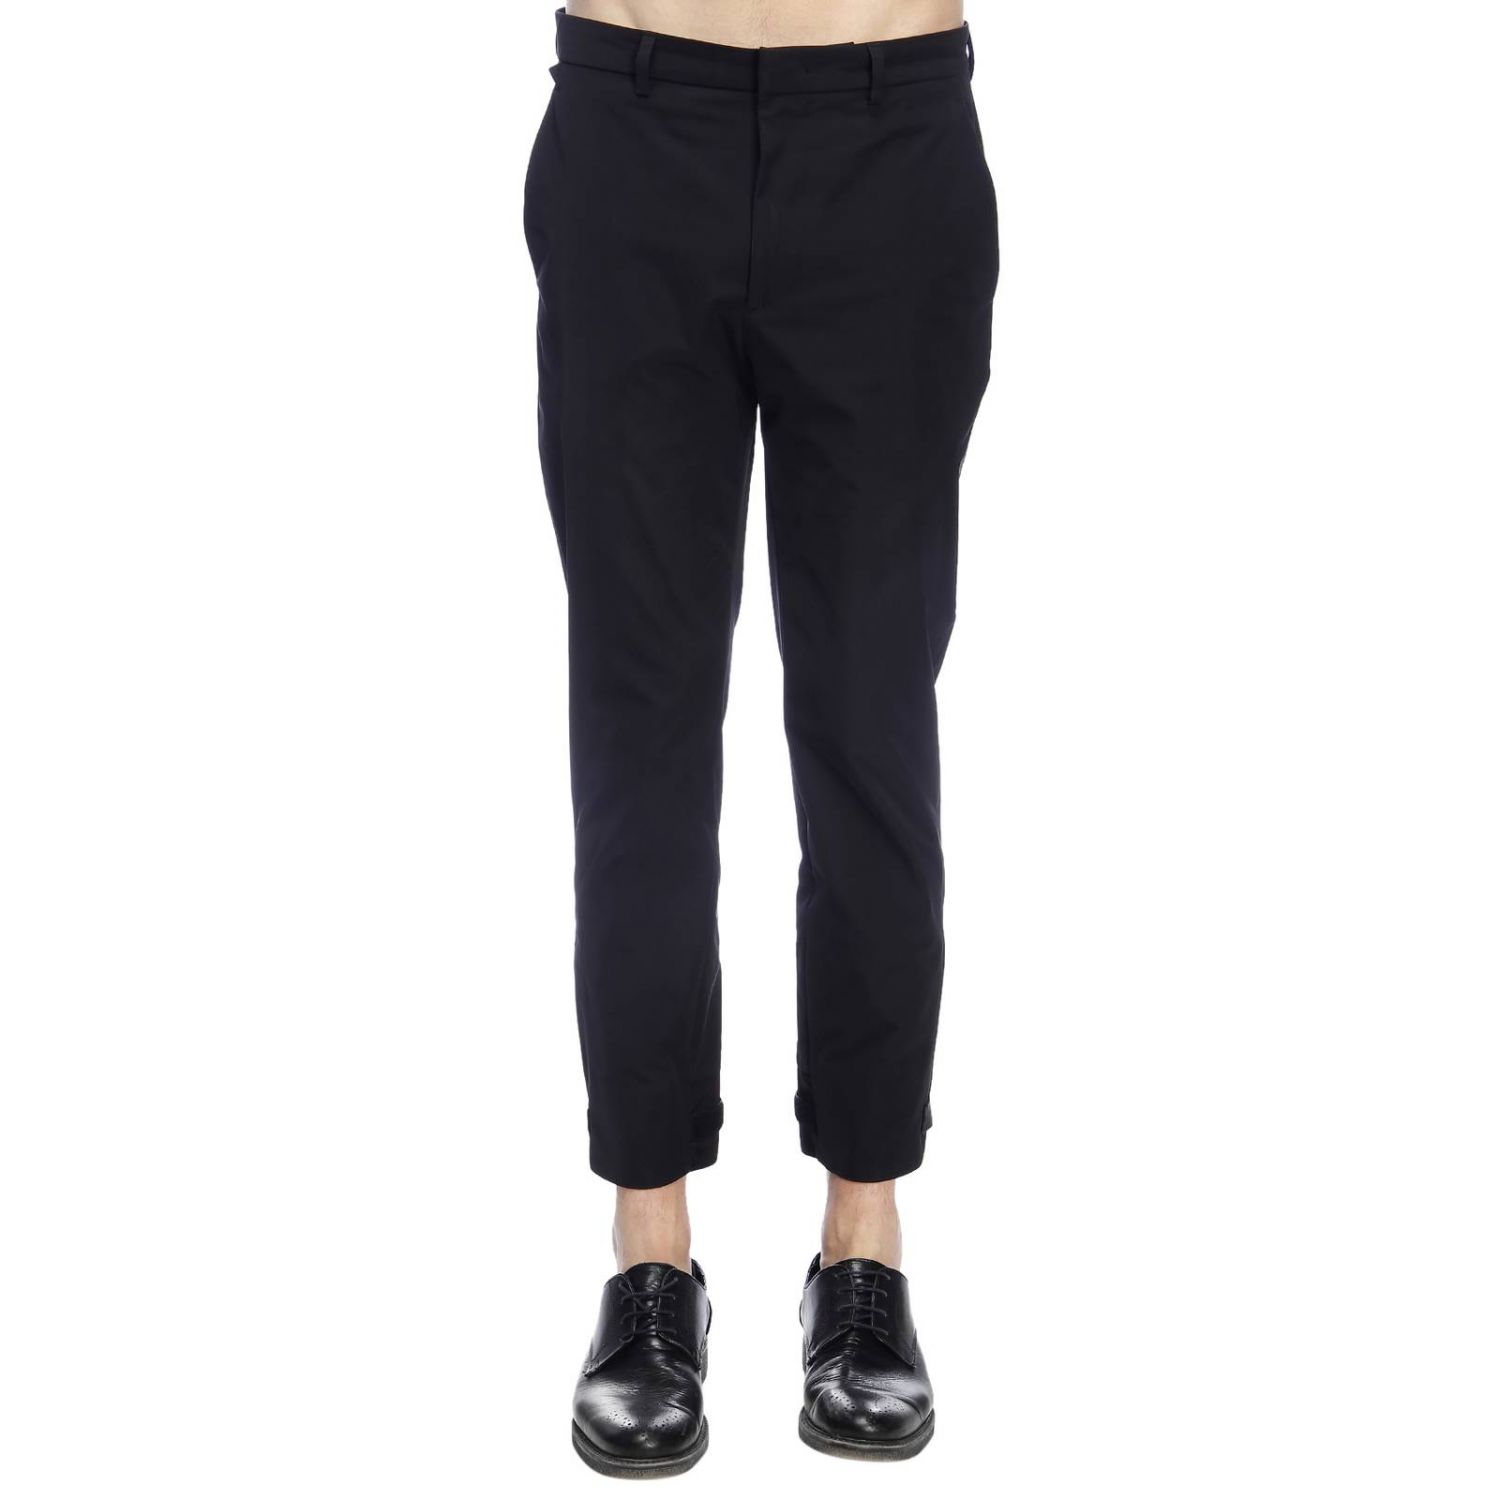 PRADA: pants for man - Black | Prada pants SPG46 1KJW online at GIGLIO.COM